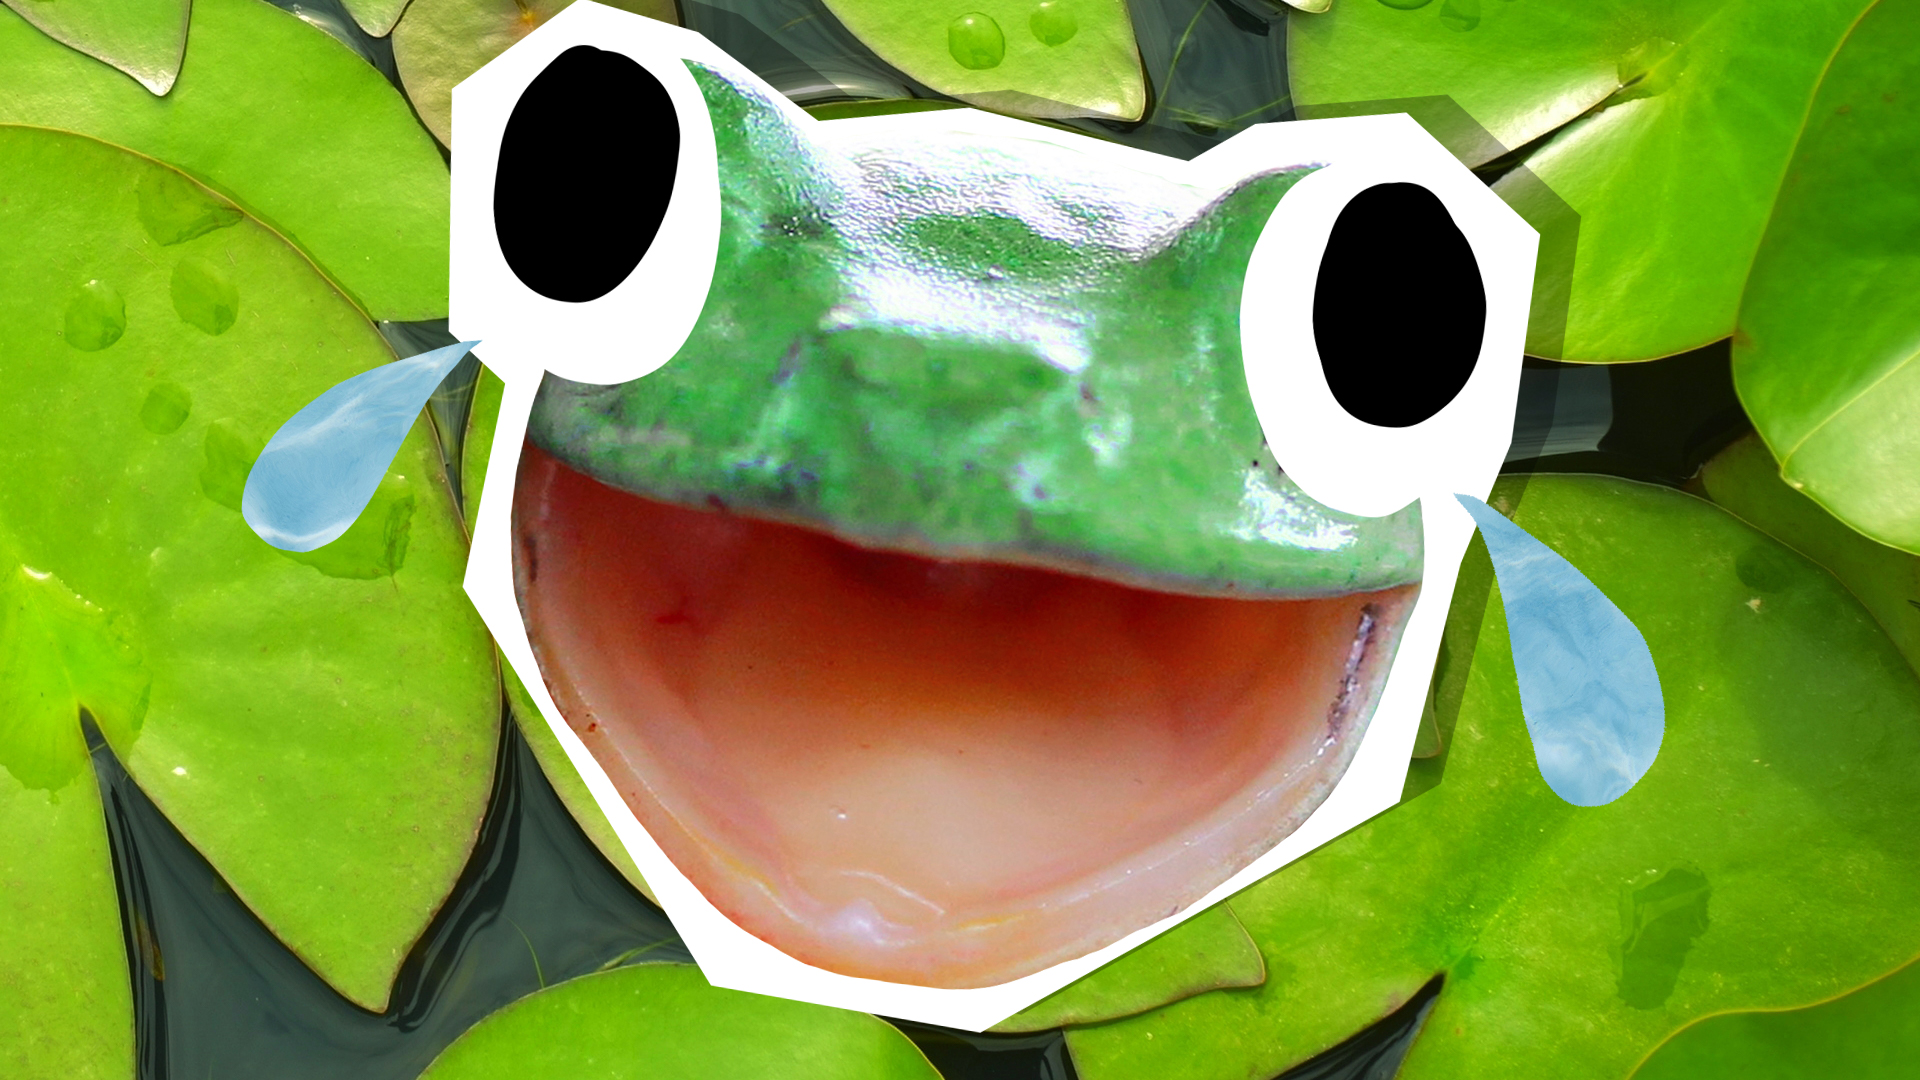 Frog Jokes